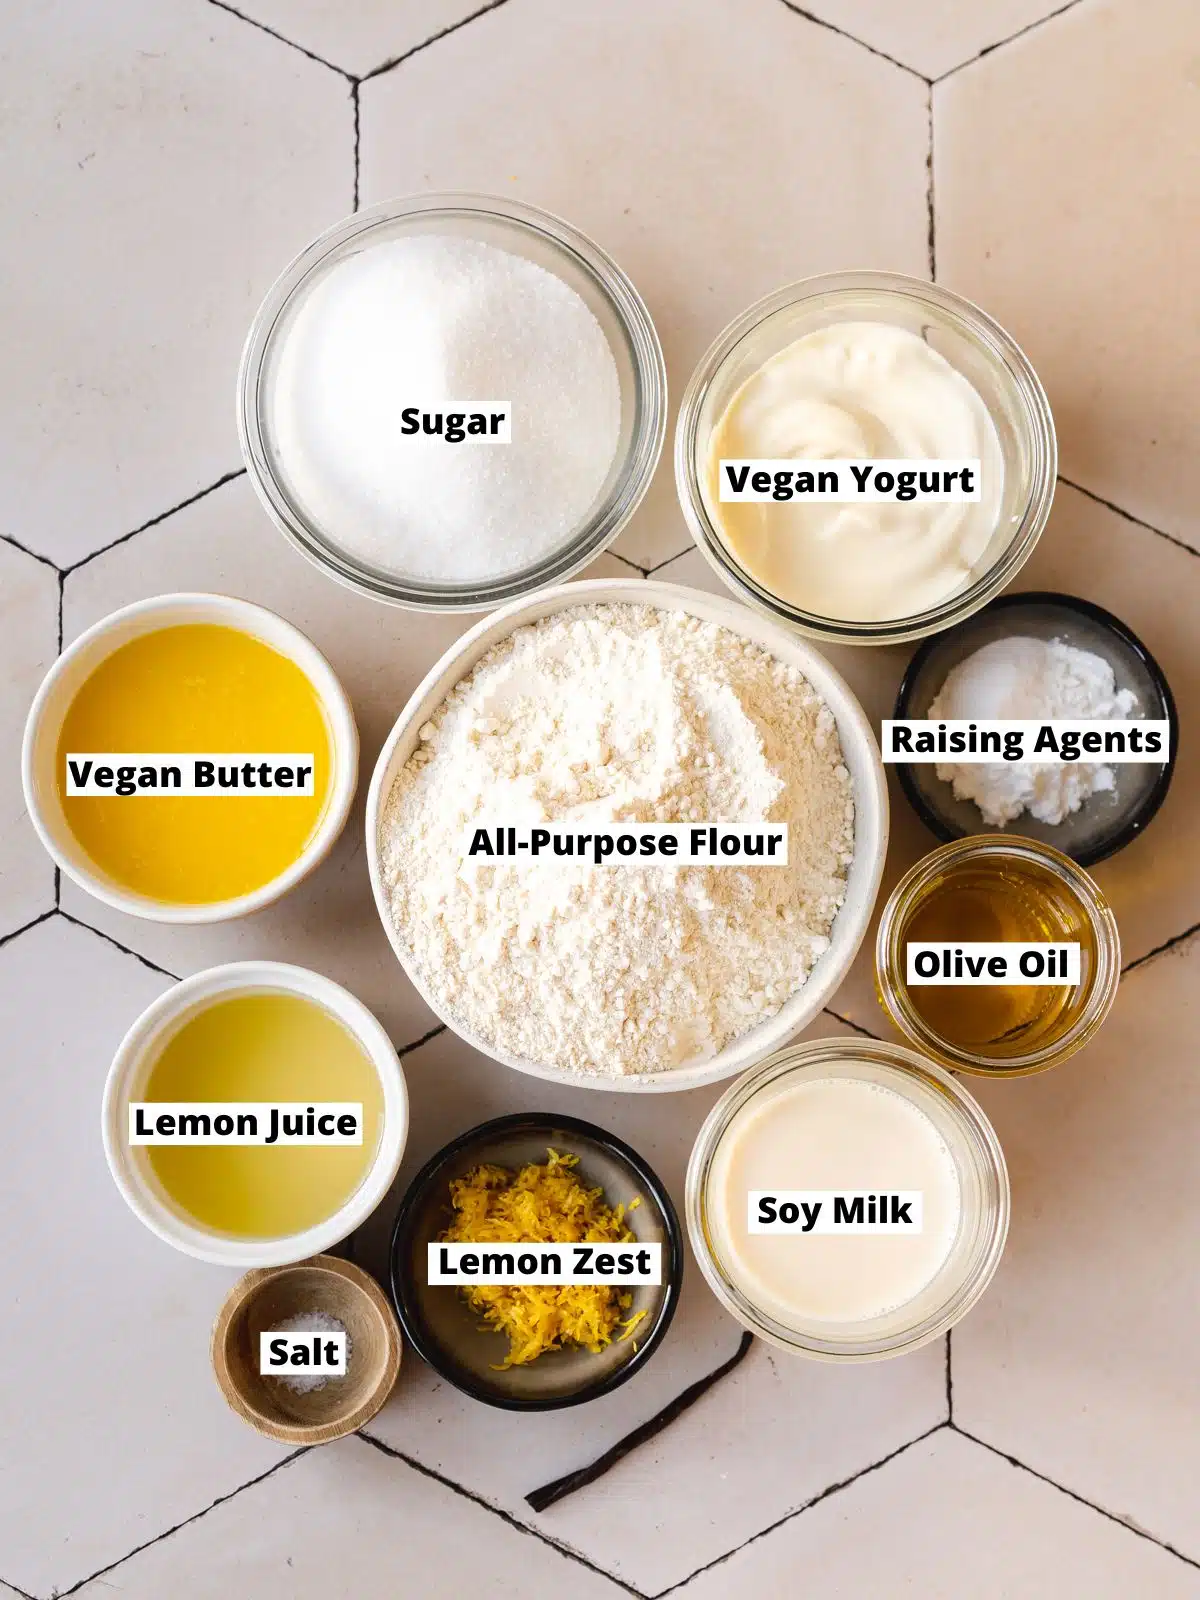 ingredients for easy vegan lemon sheet cake measured out in bowls on a tiled surface.